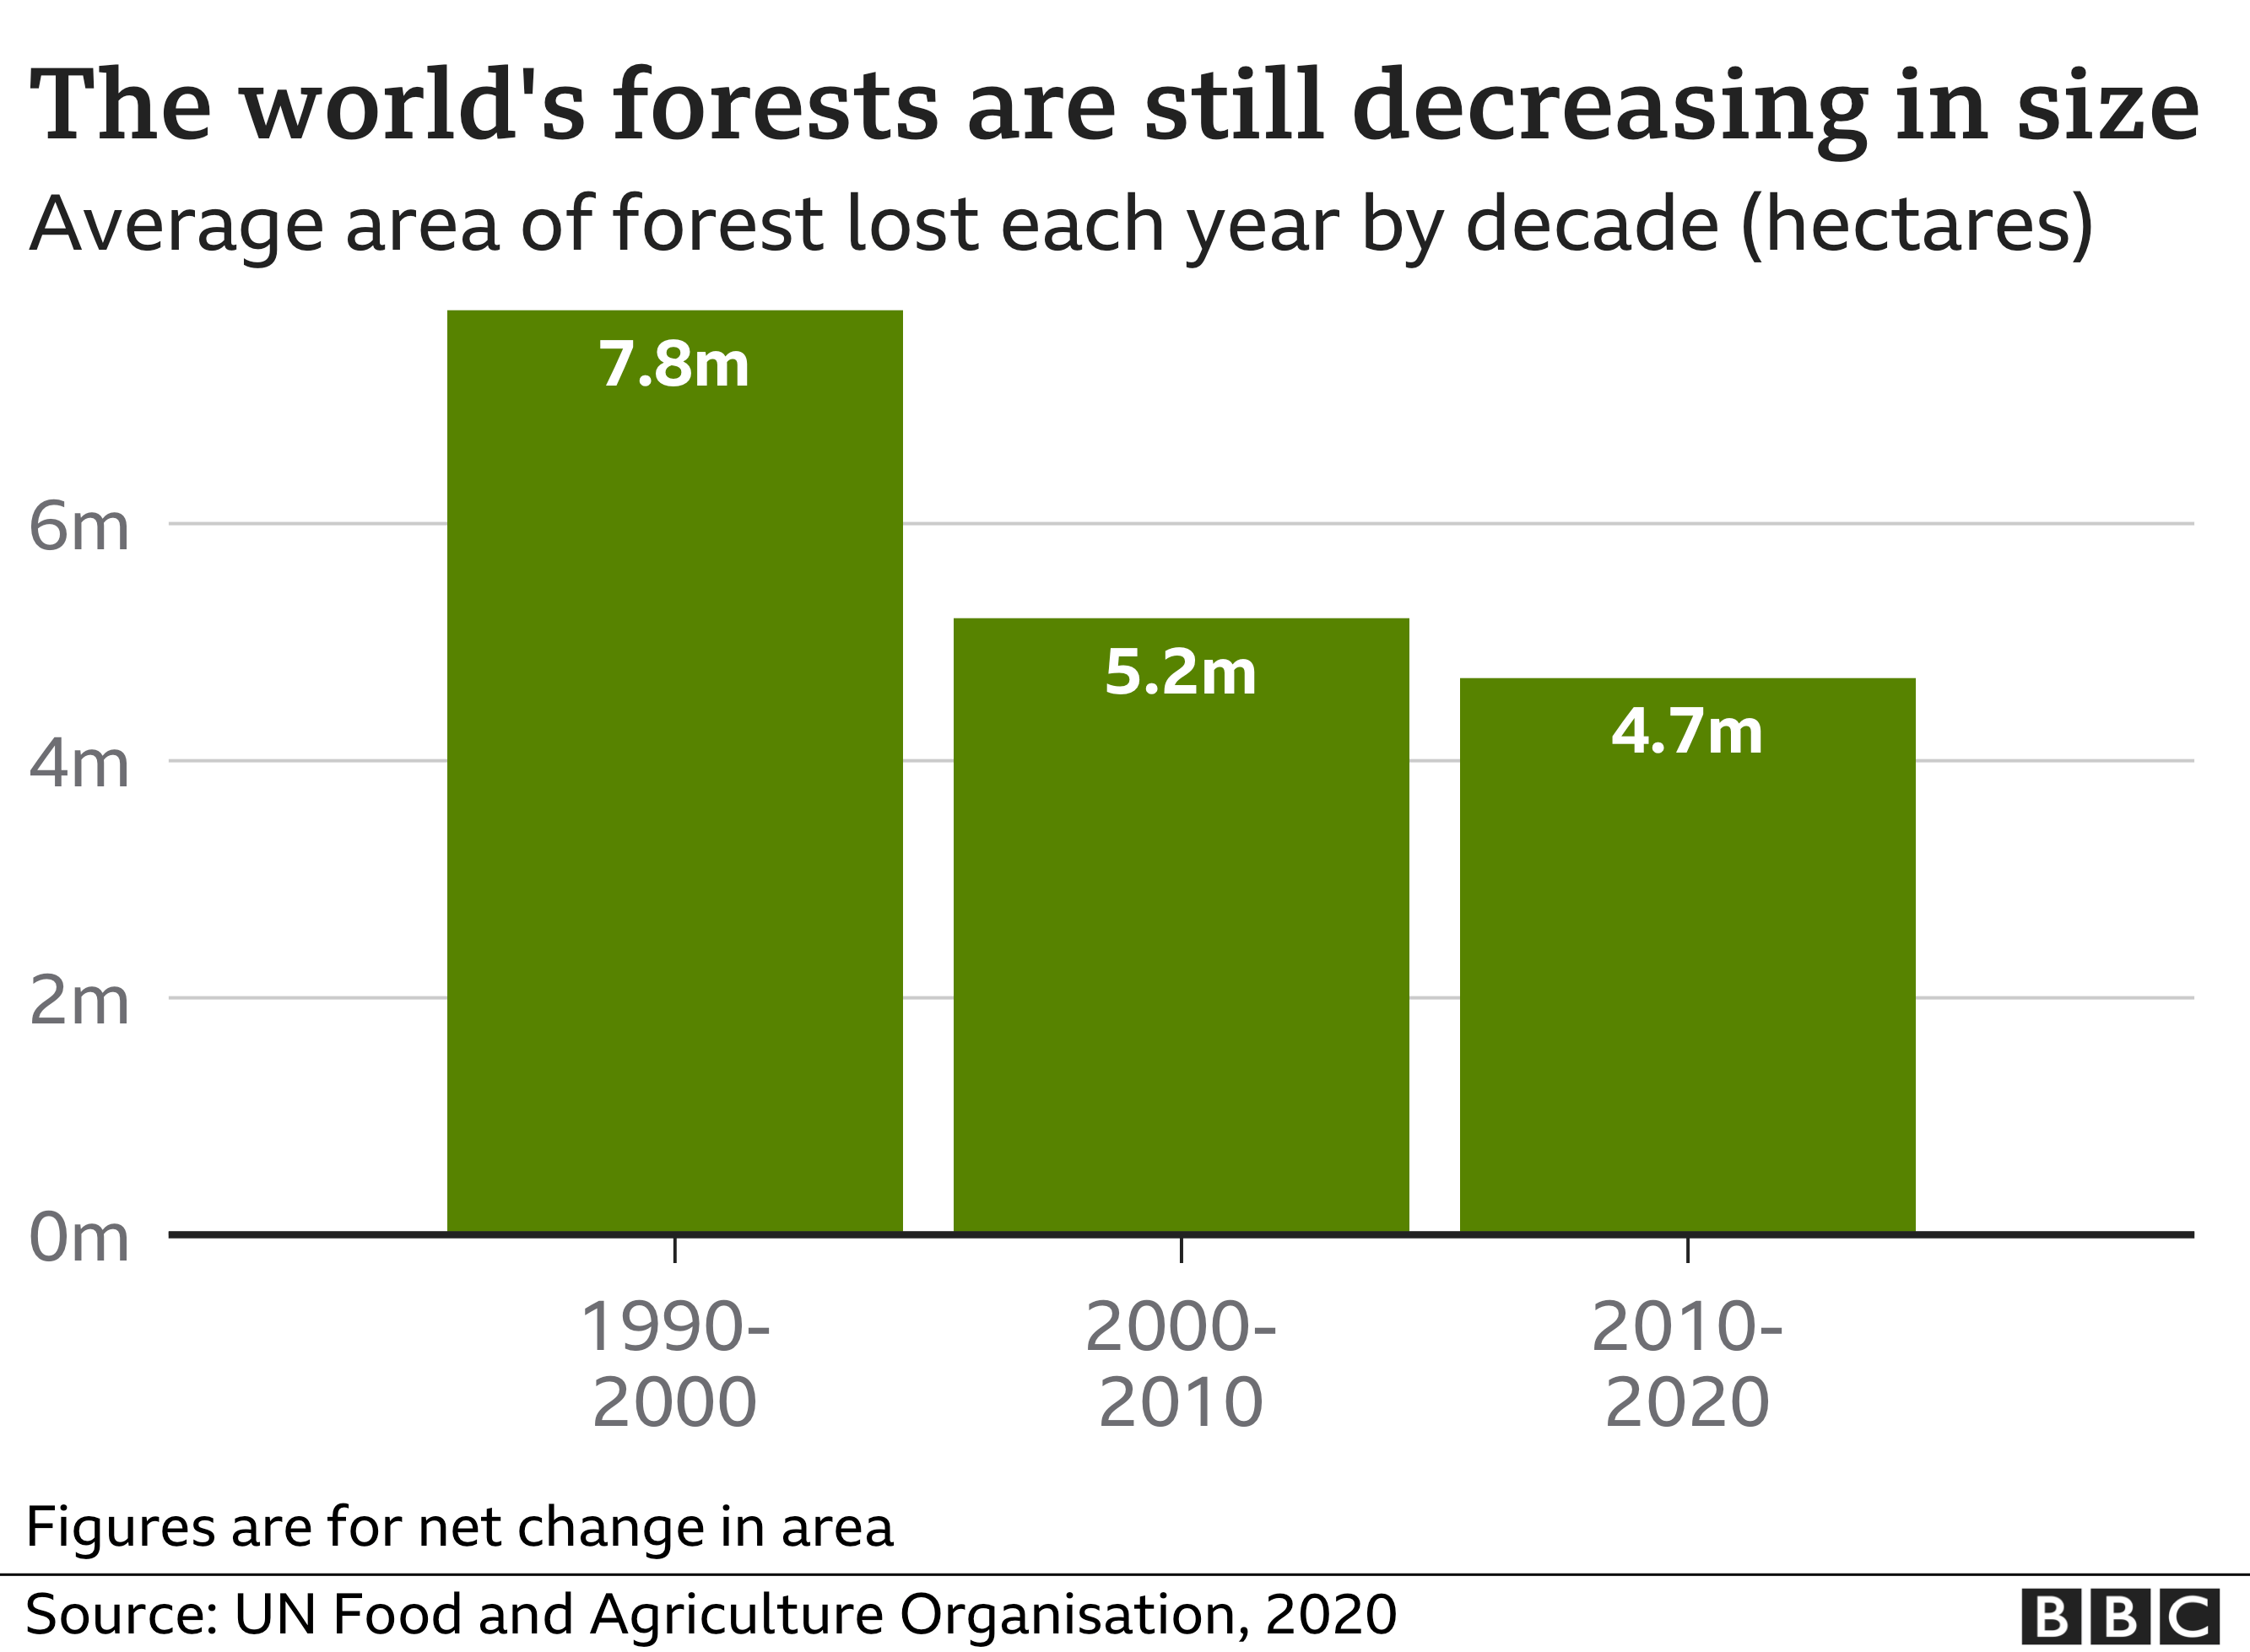 hypothesis on deforestation